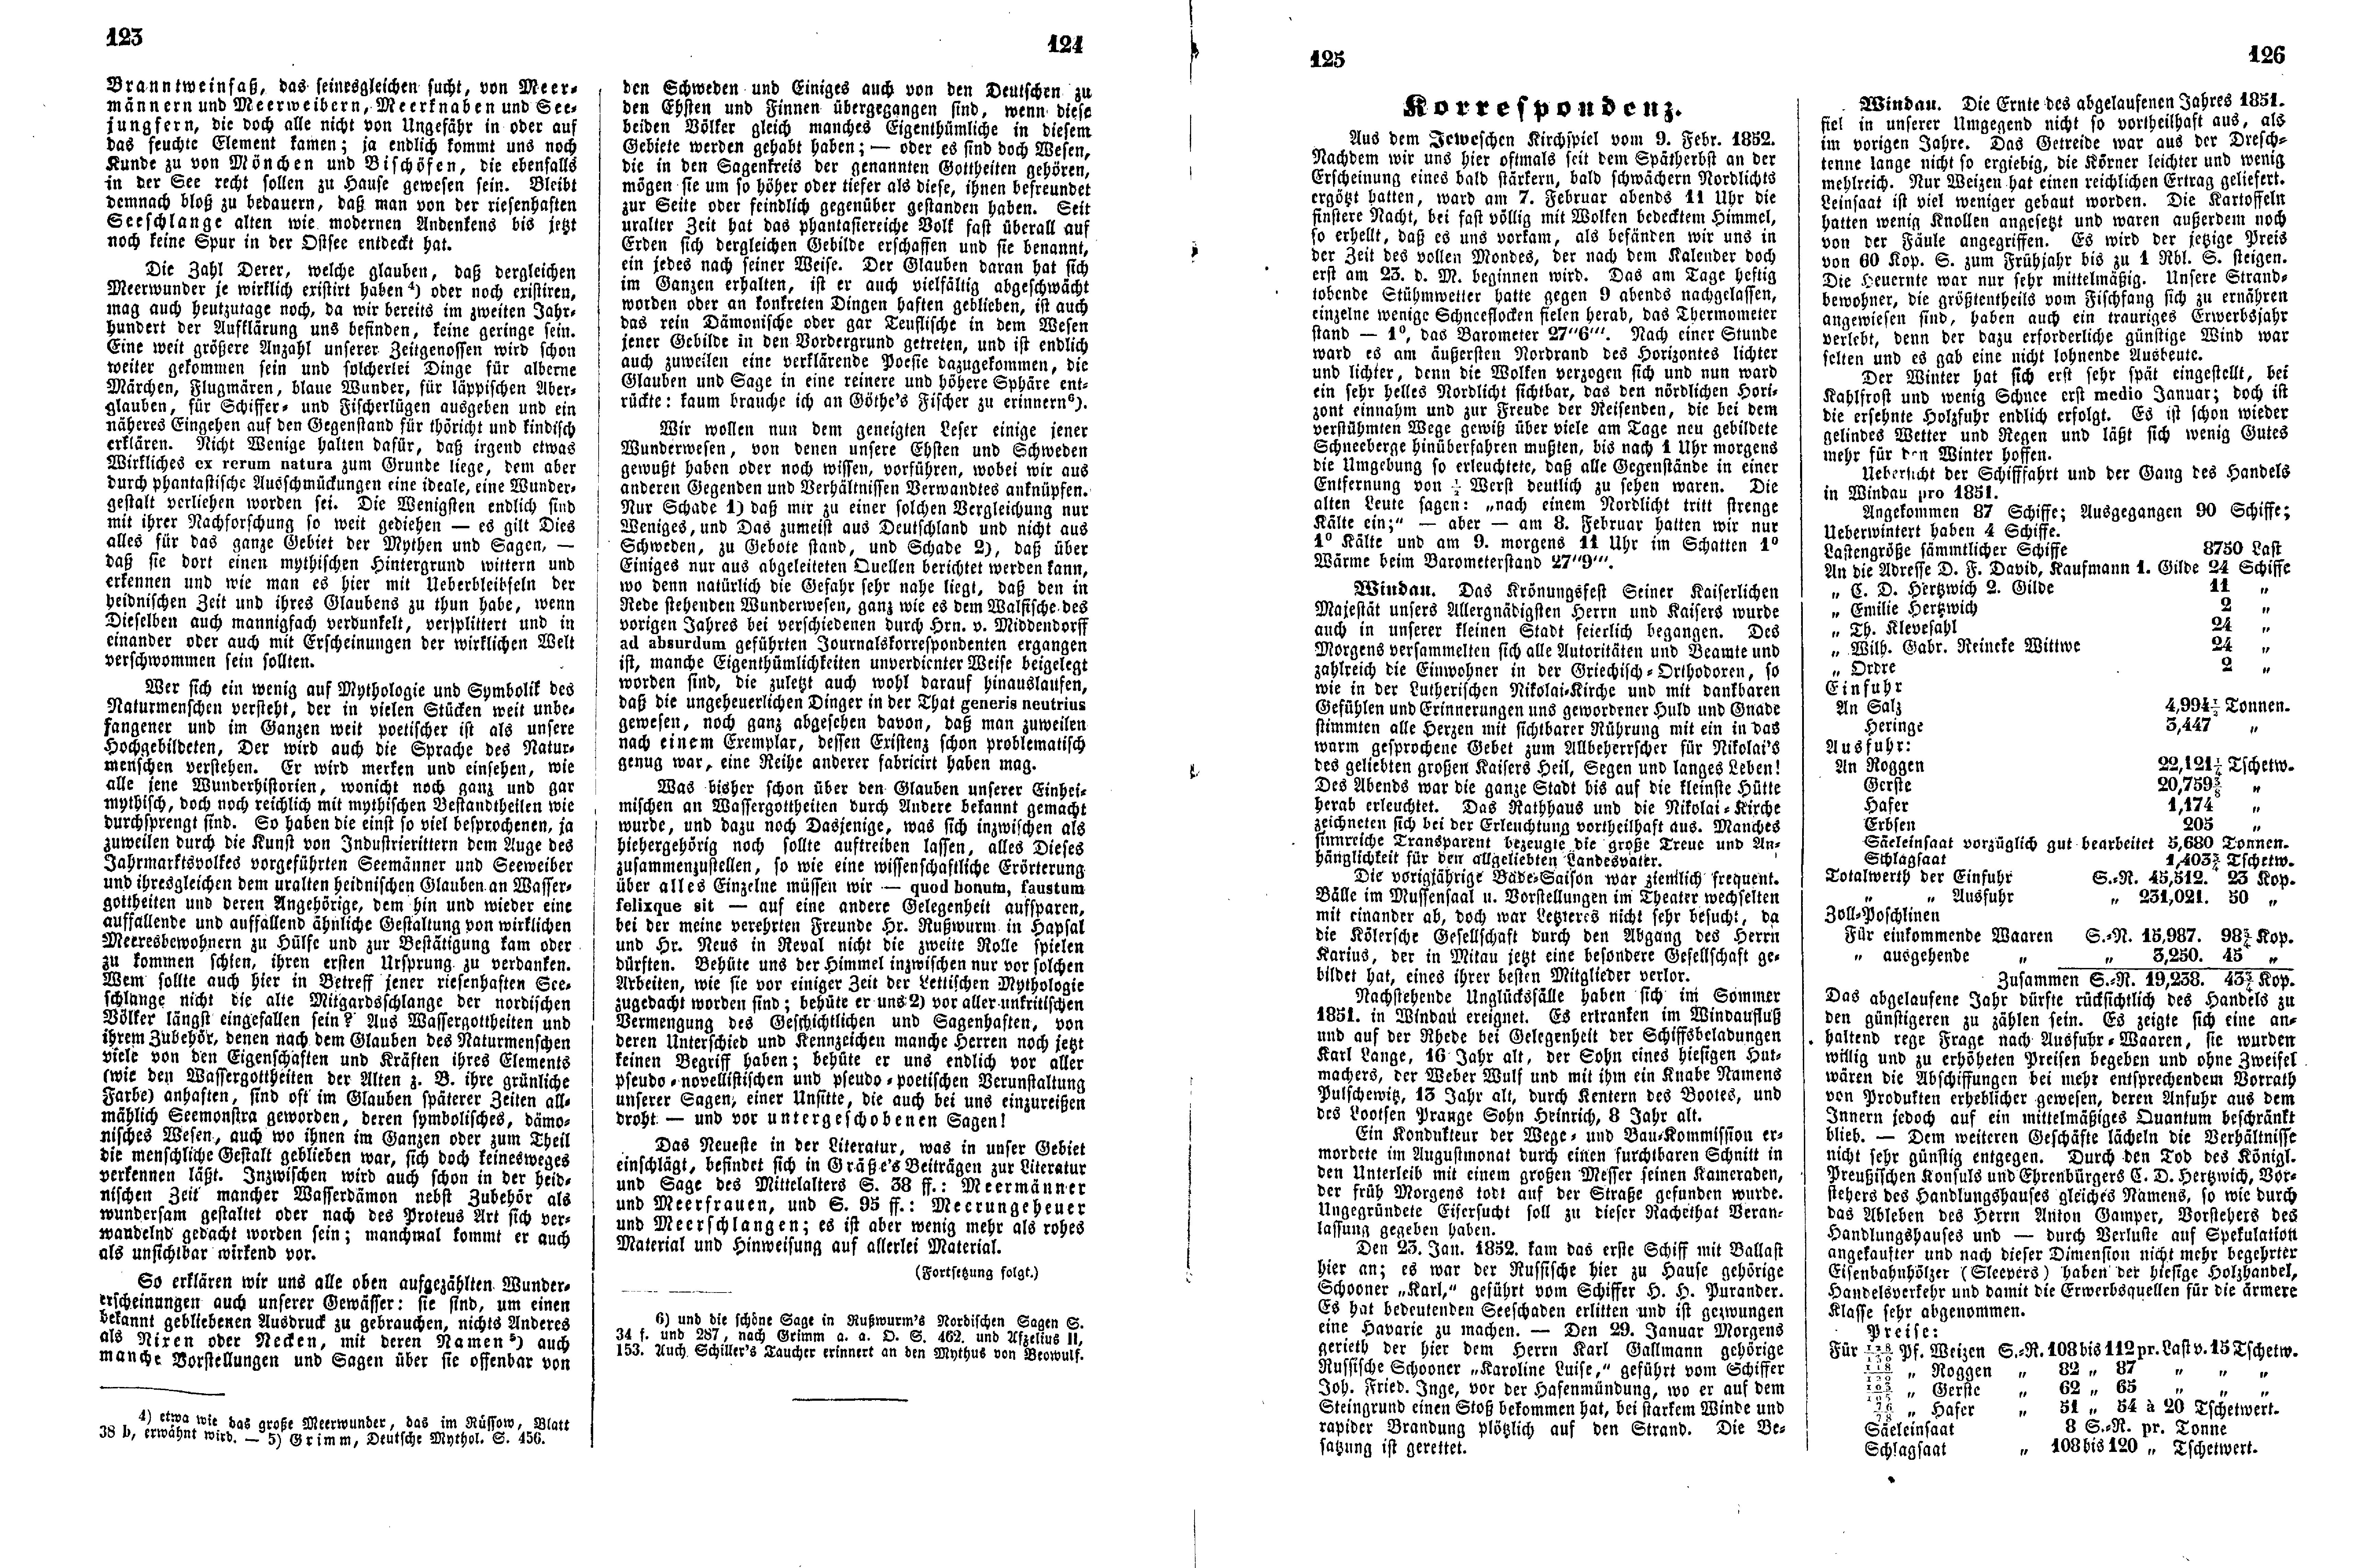 Das Inland [17] (1852) | 35. (123-126) Main body of text